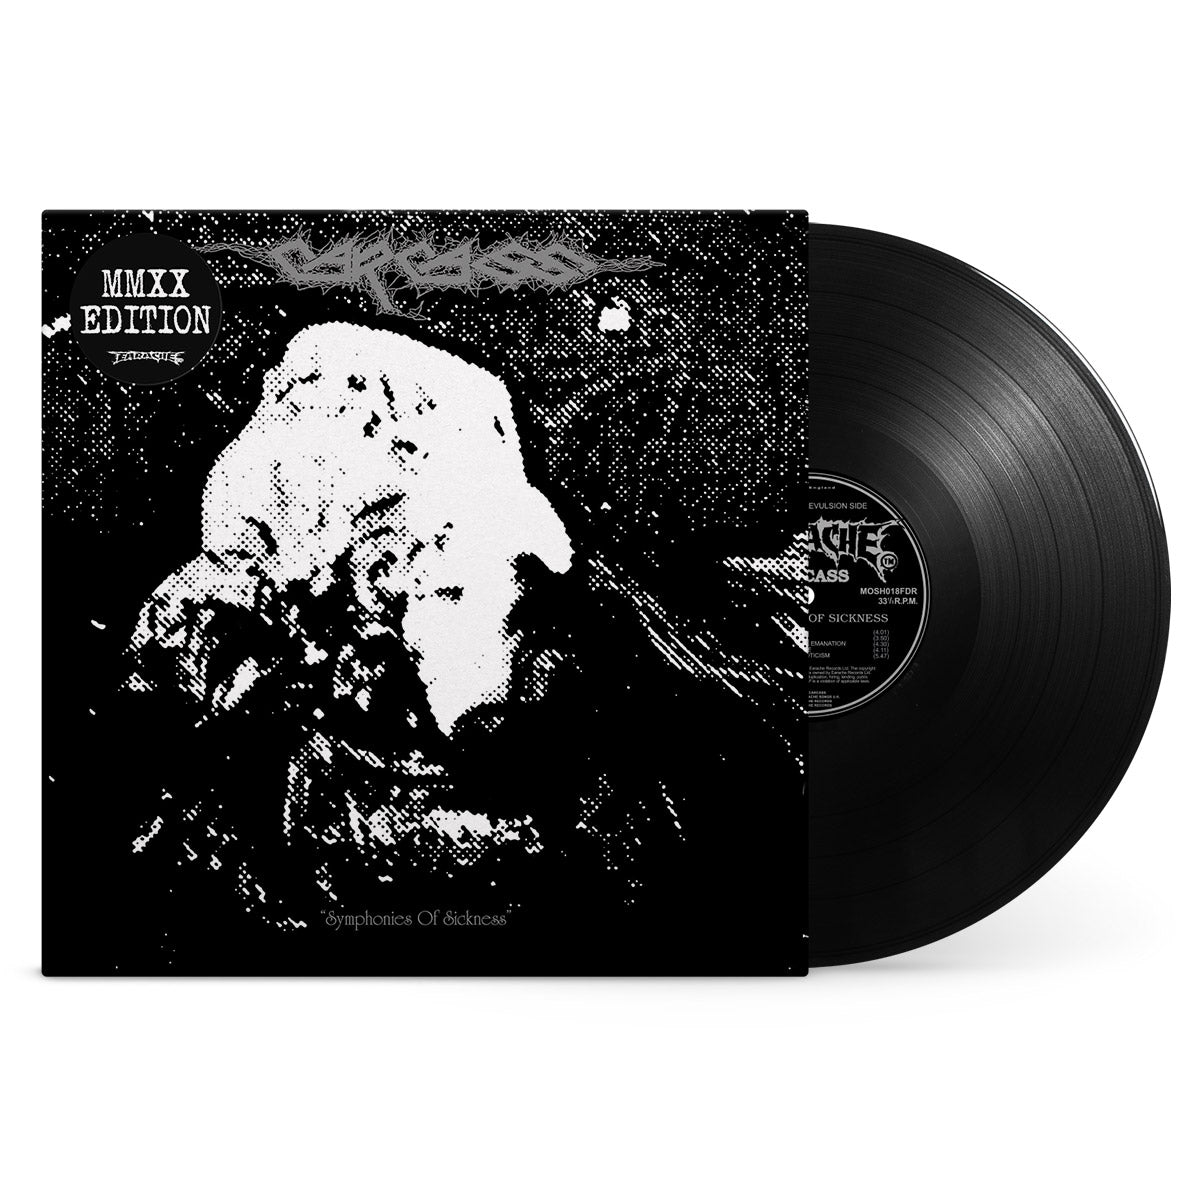 Carcass "Symphonies Of Sickness MMXX" FDR Black Vinyl